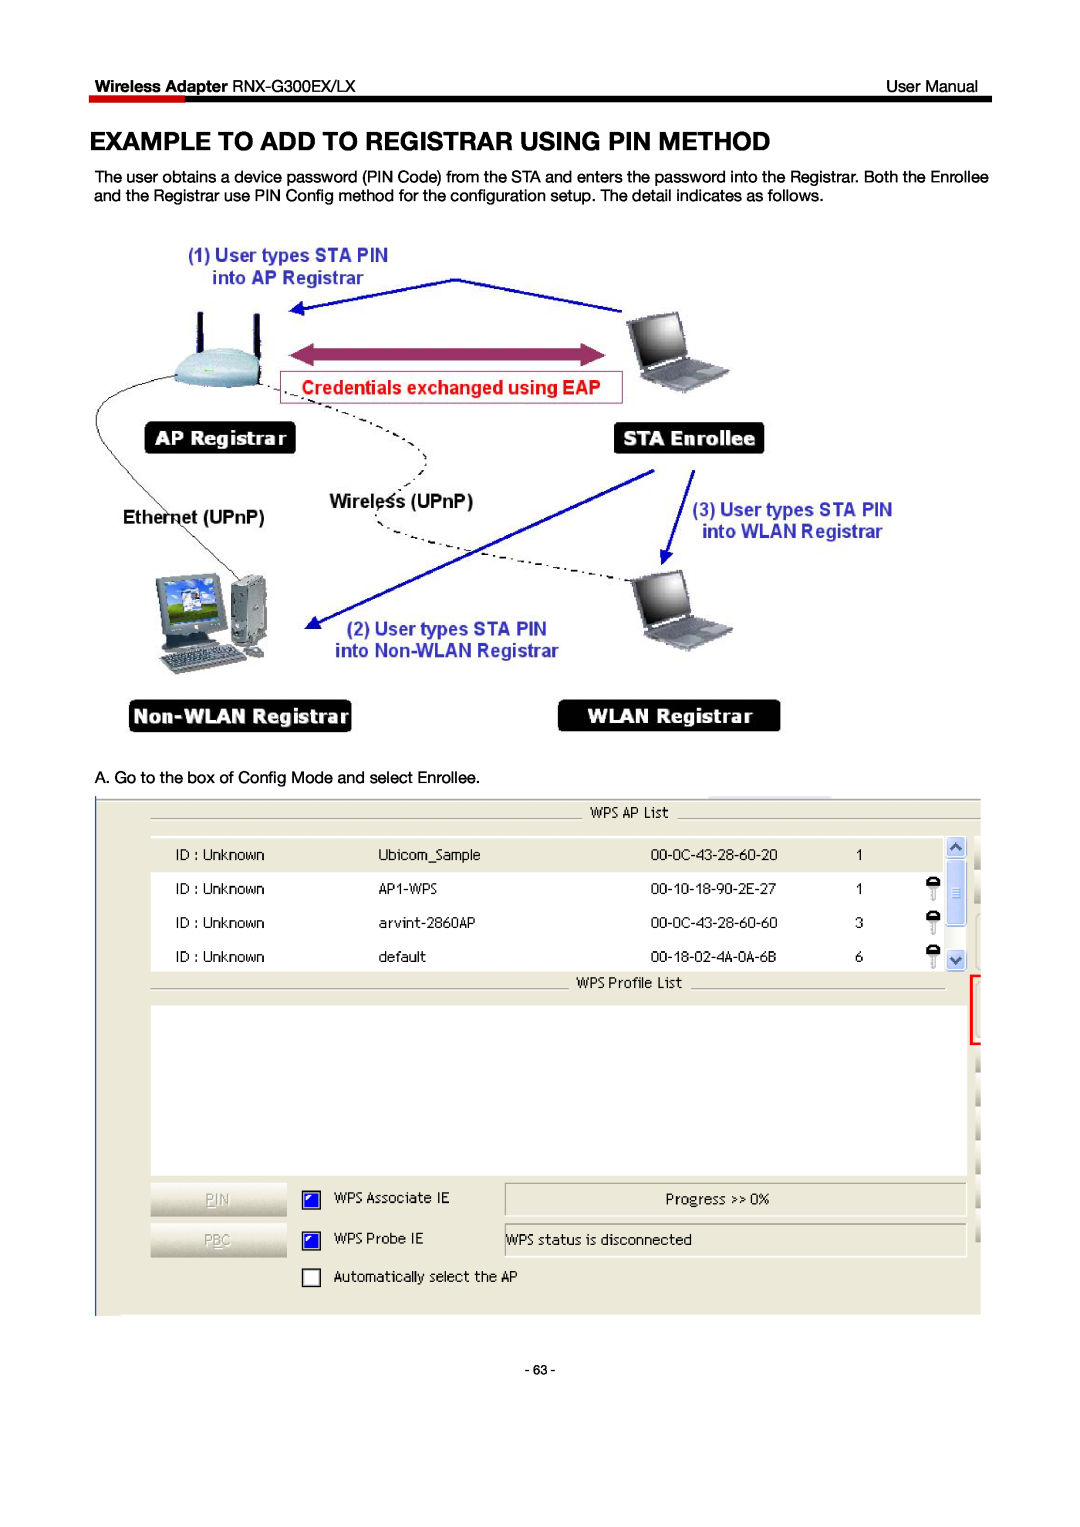 Rosewill RNX-G300EXLX user manual Example To Add To Registrar Using Pin Method, Wireless Adapter RNX-G300EX/LX, User Manual 